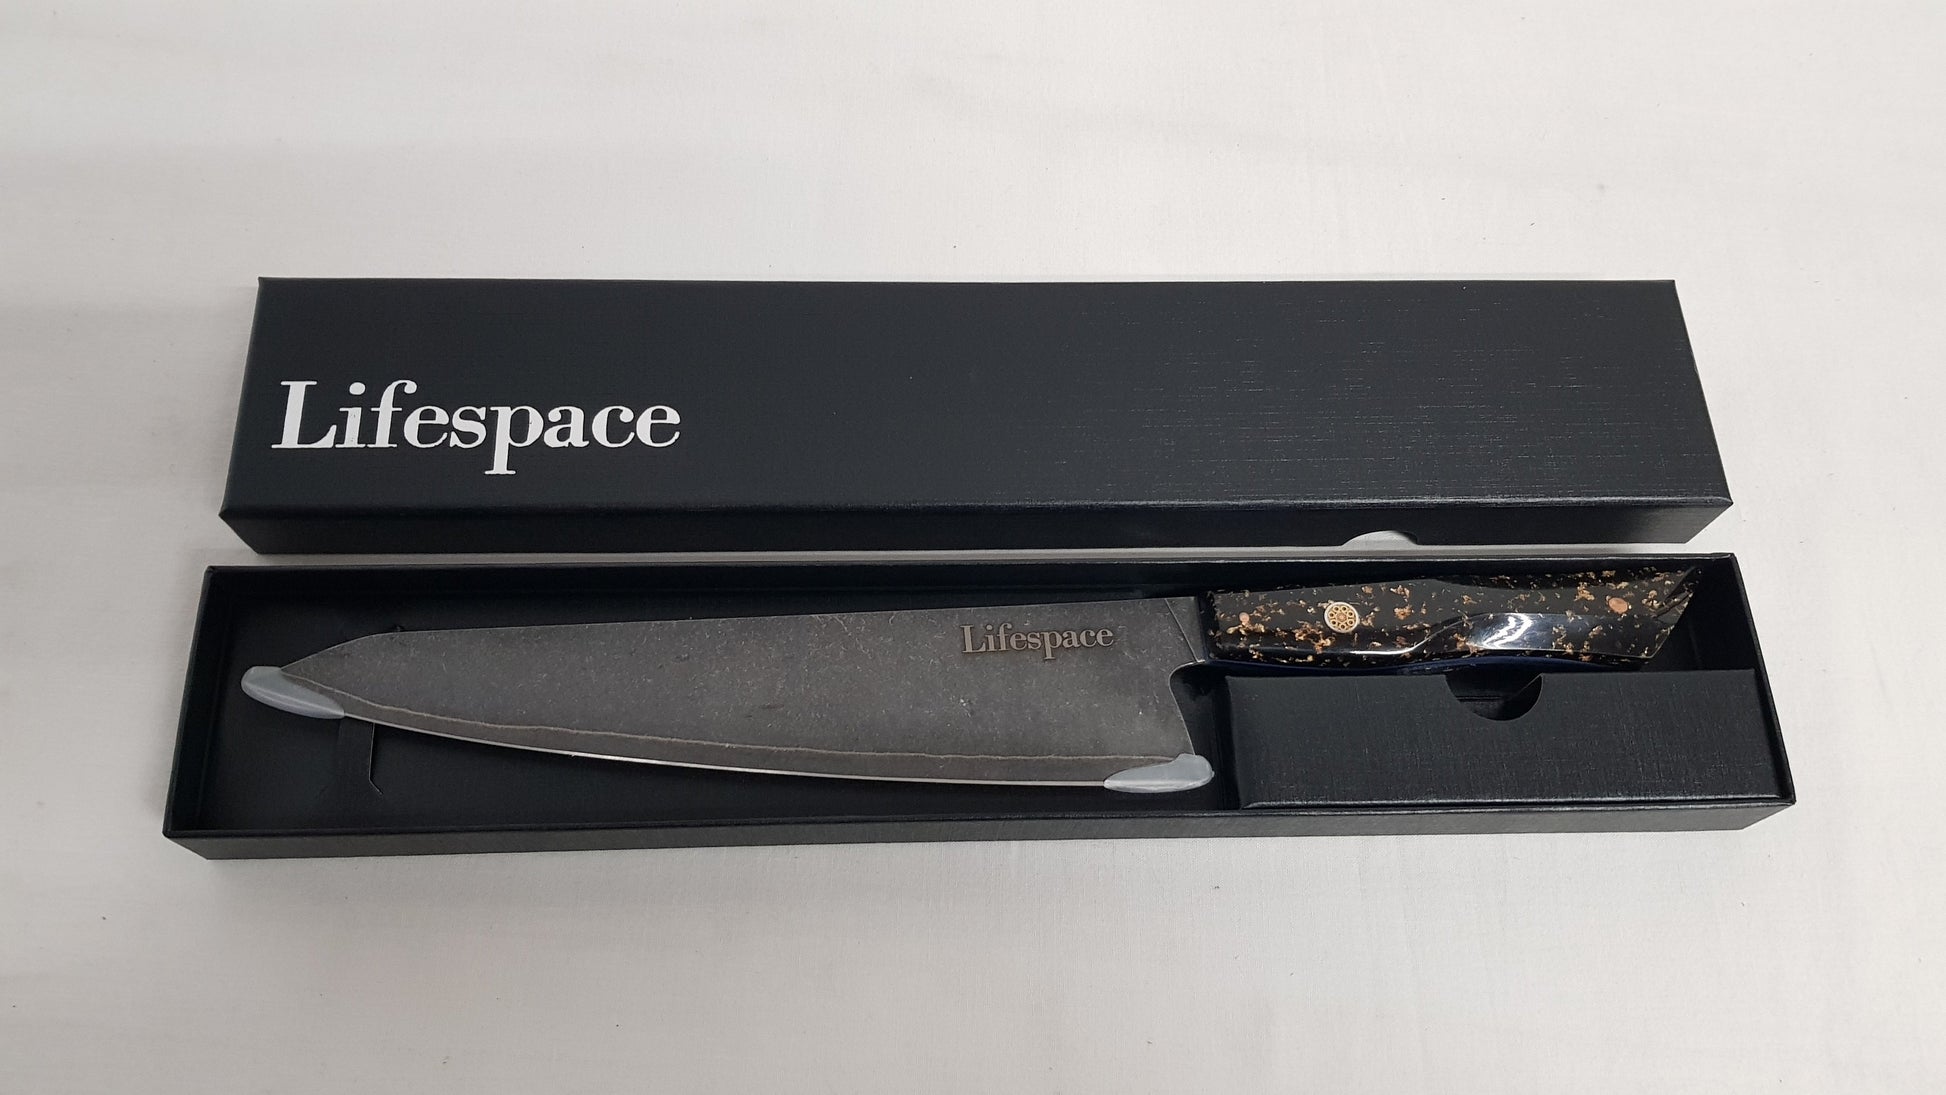 Lifespace 8" Japanese VG10 Cladded Steel Kurouchi Kiristuke Knife w/ Resin Handle - Lifespace